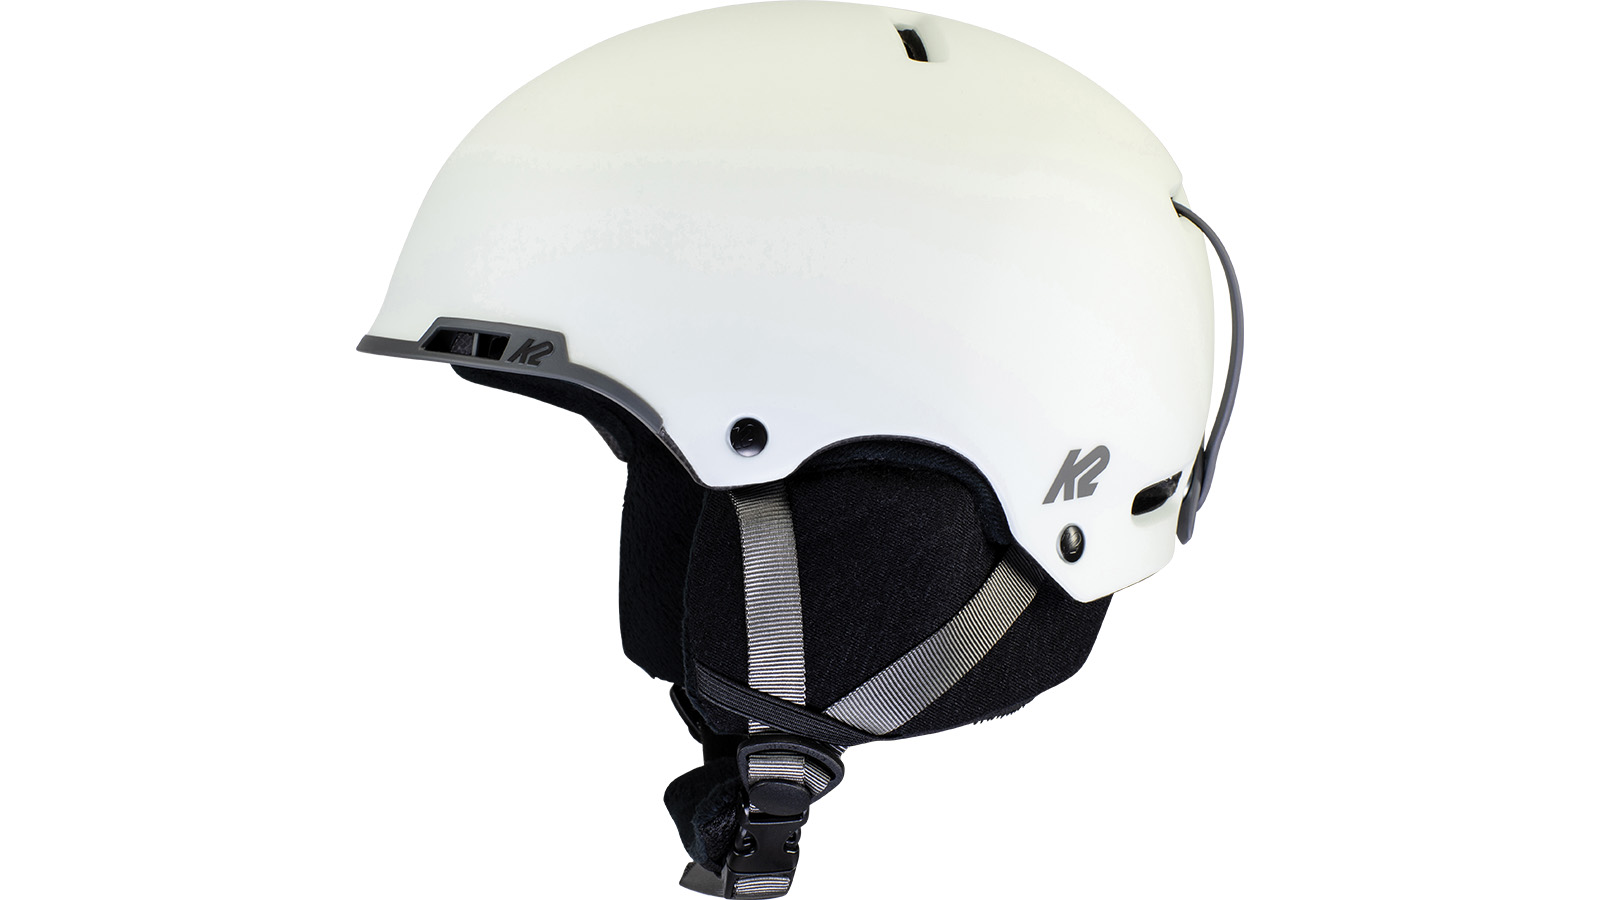 K2 FW20/21 Snow Helmets